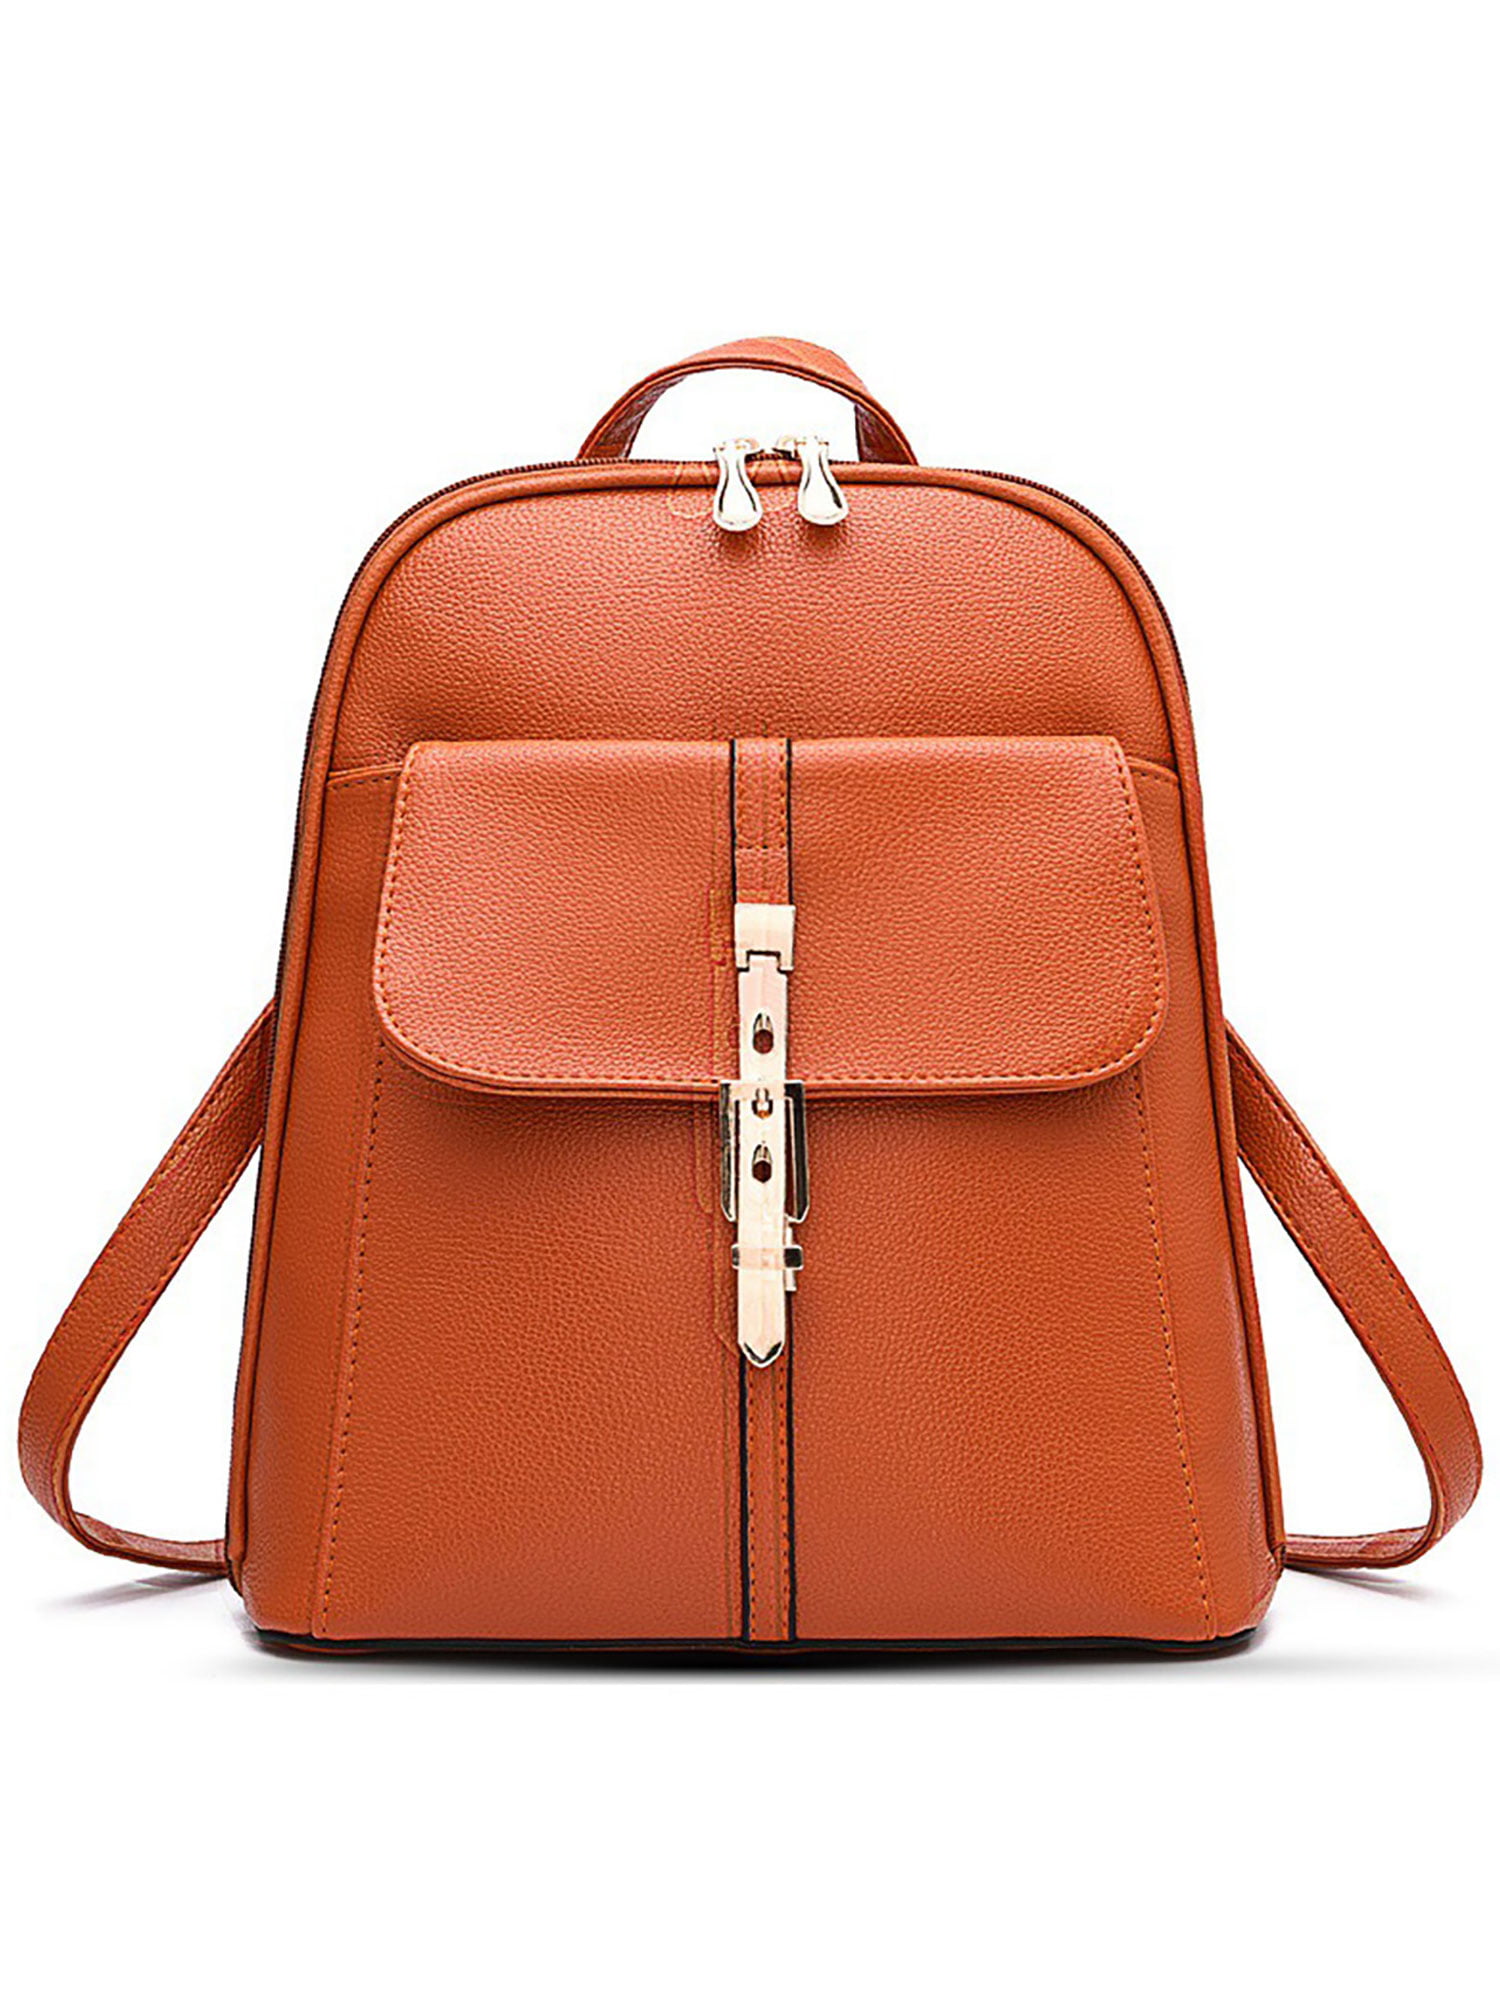 Women's Shoulder Bag Handbag Shoppers Messenger Bag Crossbody Backpack Rucksack 